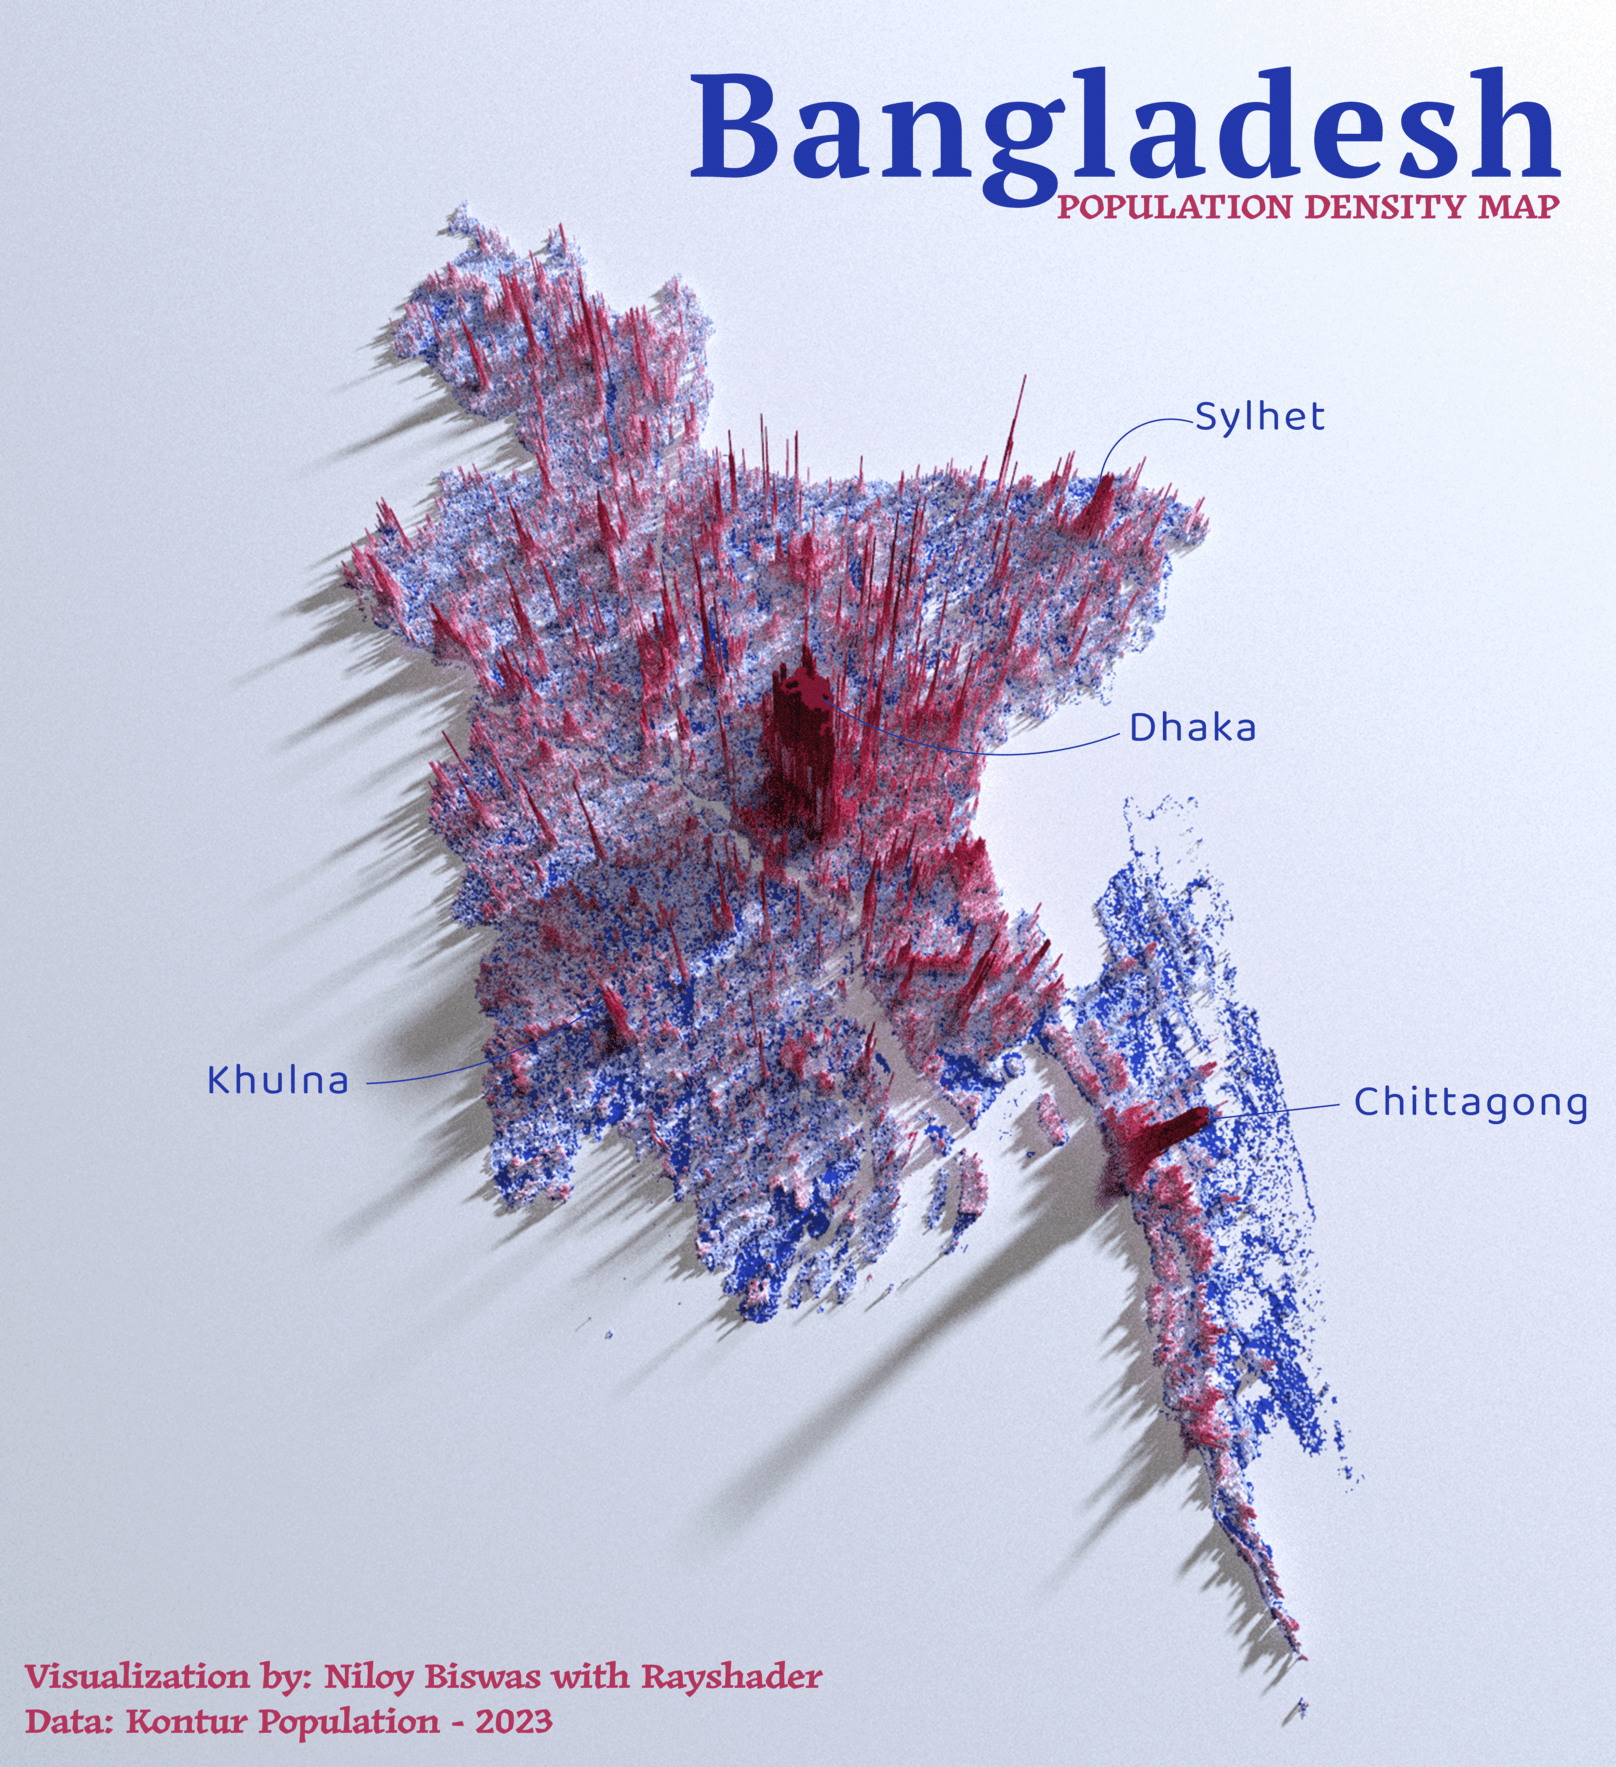 Bangladesh population density map